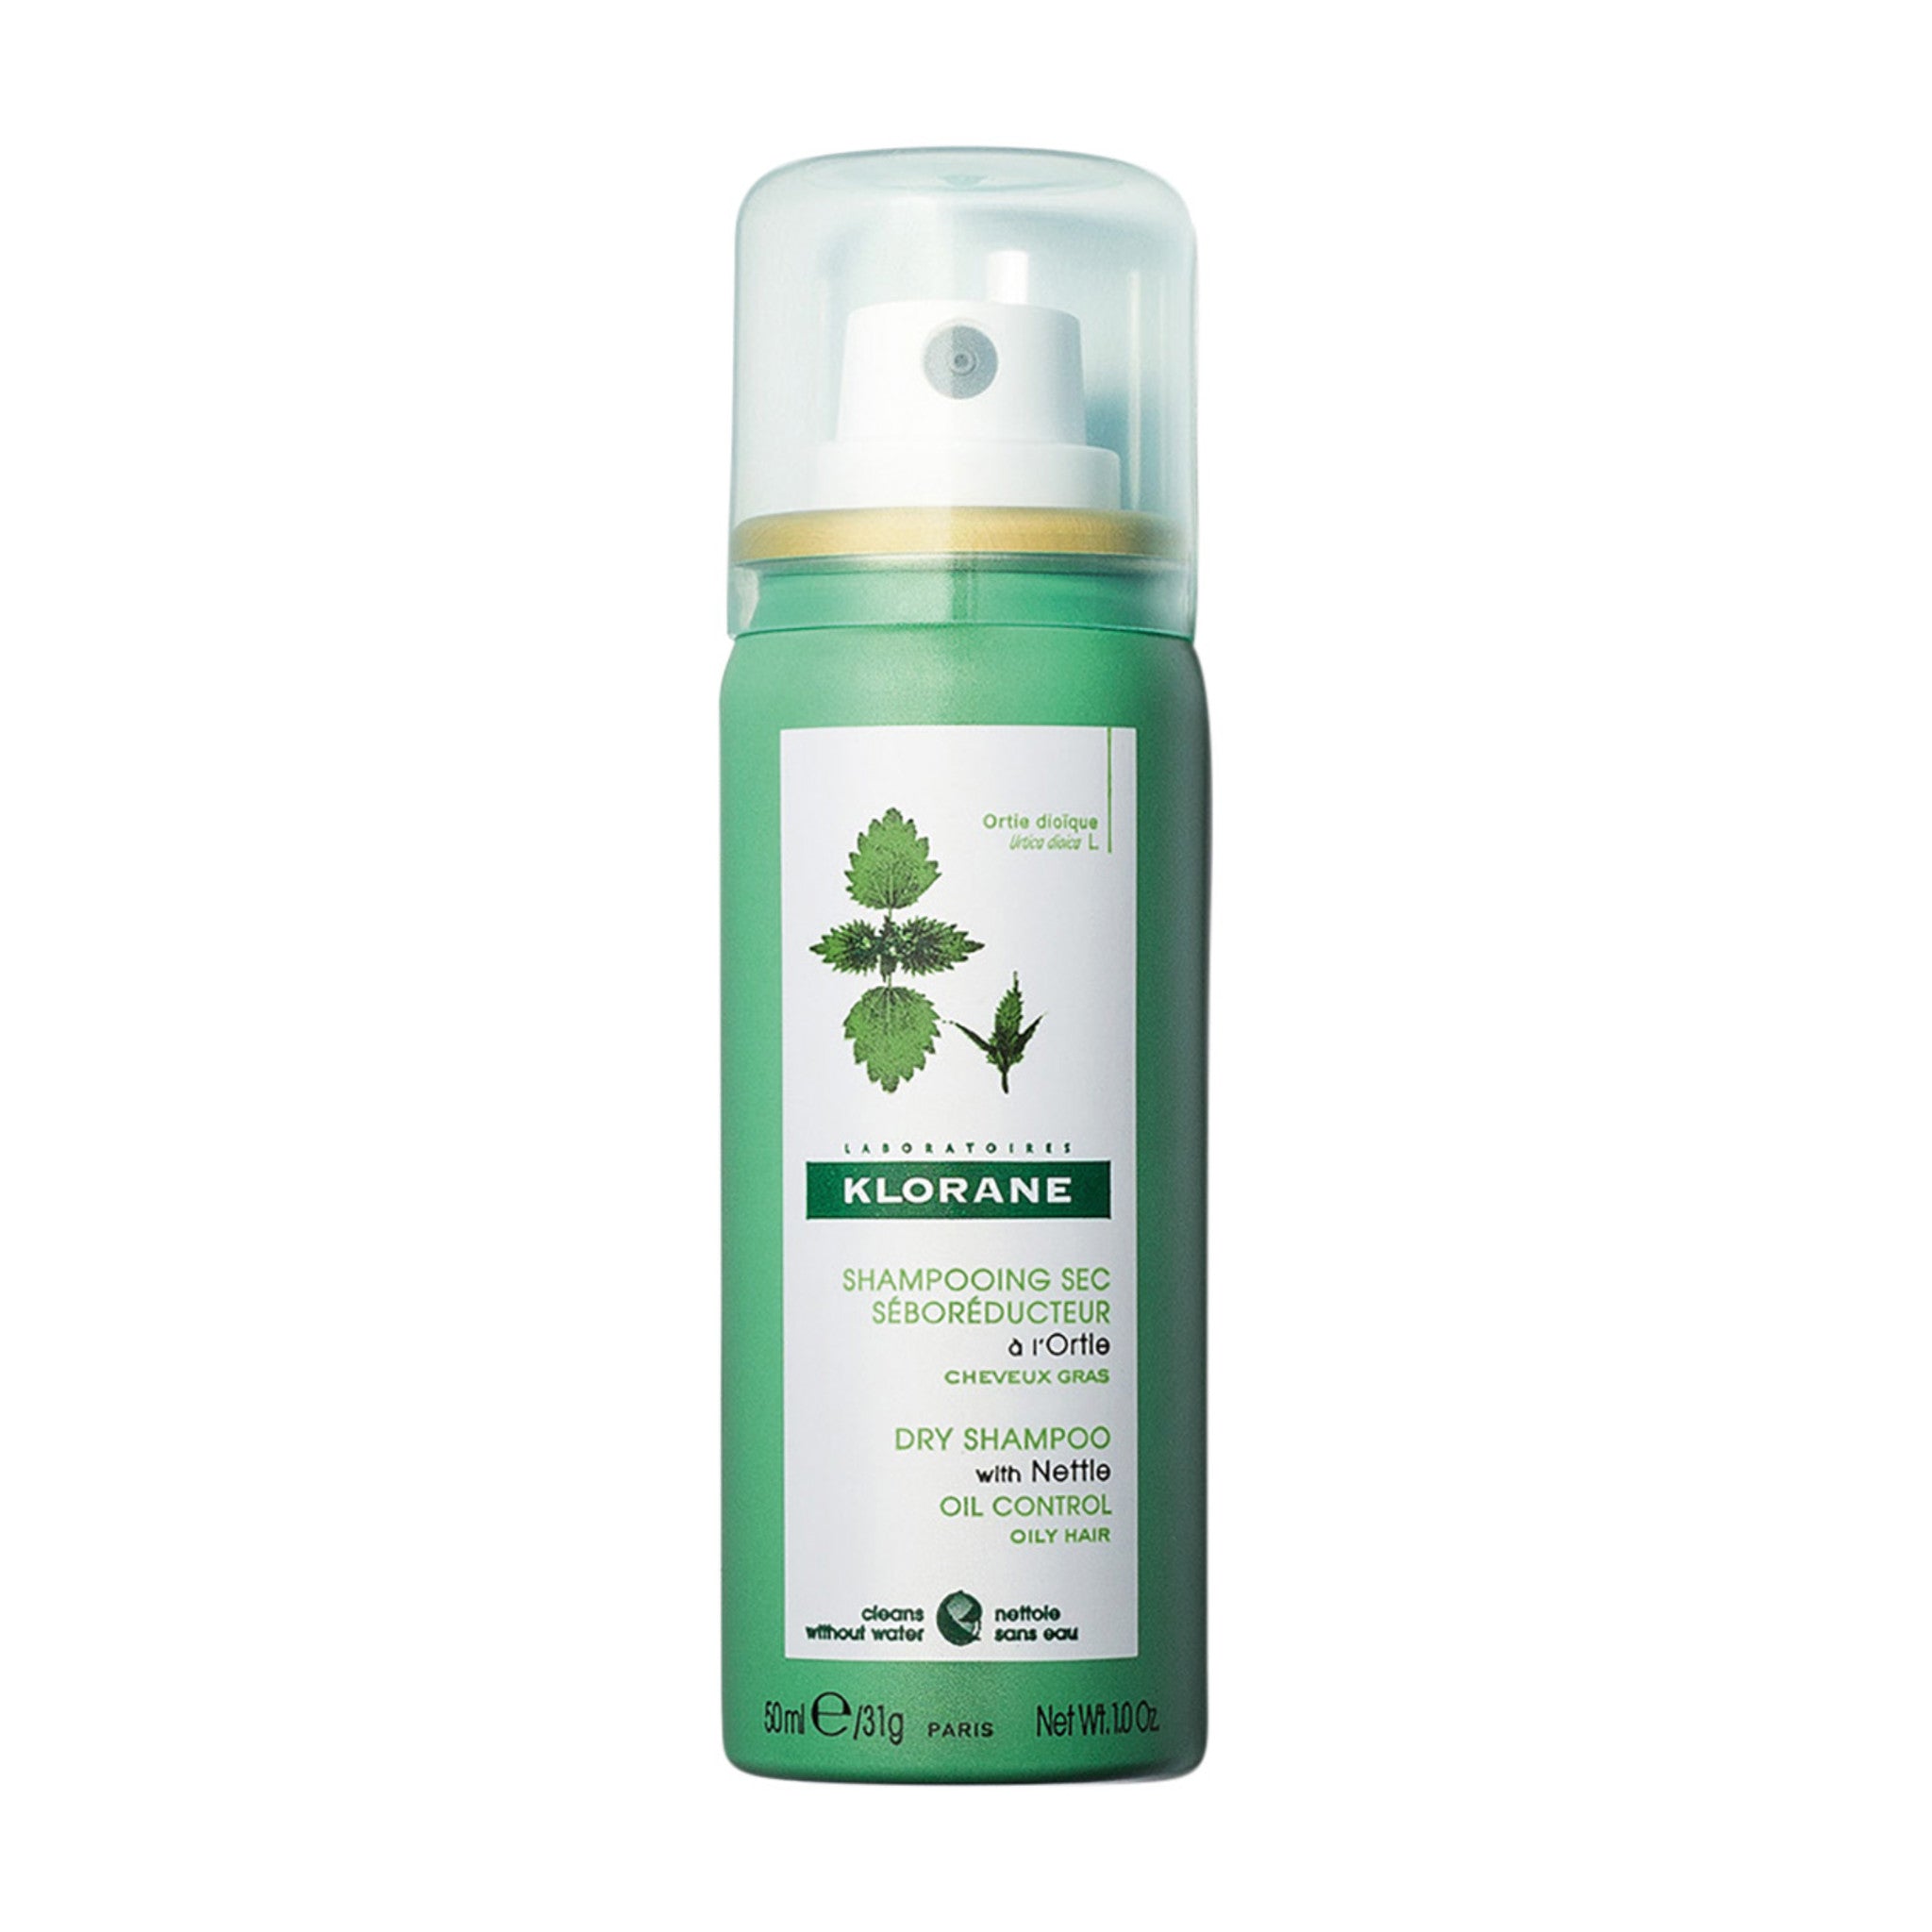 Klorane Dry Shampoo With Nettle Size variant: 1 oz | 50 ml main image.